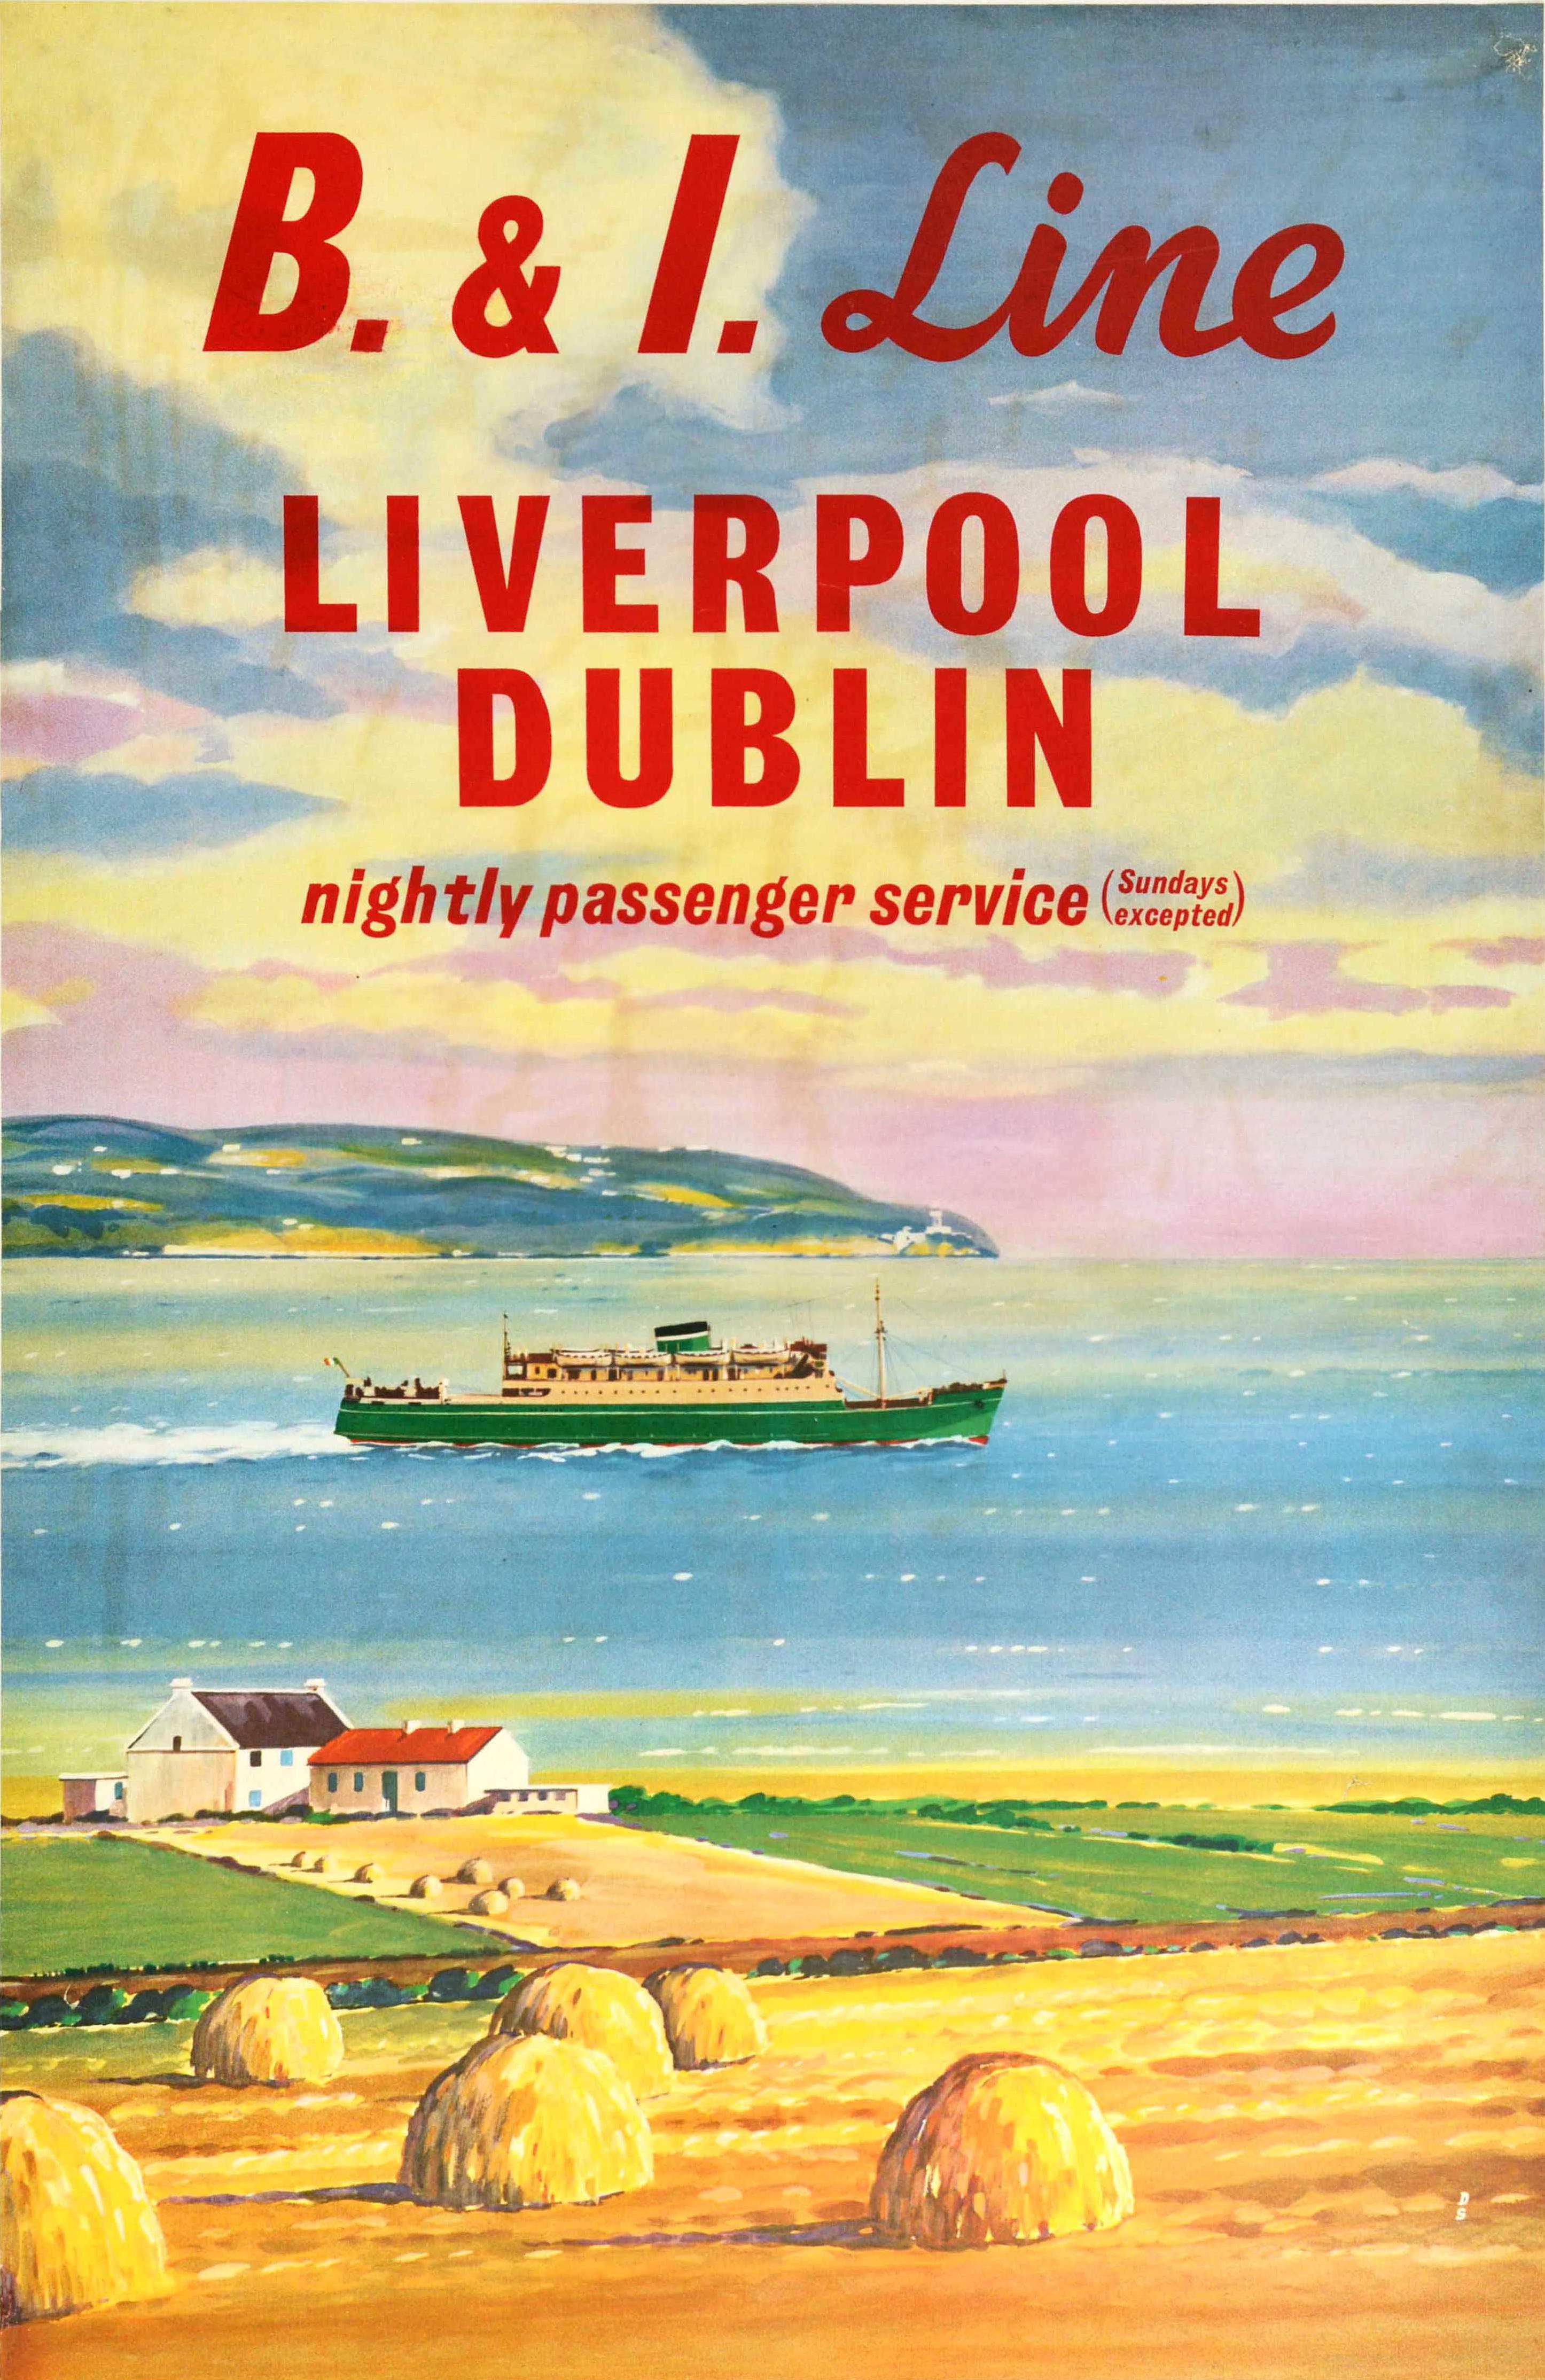 Unknown Print - Original Vintage Travel Poster B&I Line Liverpool Dublin Ferry Midcentury Design